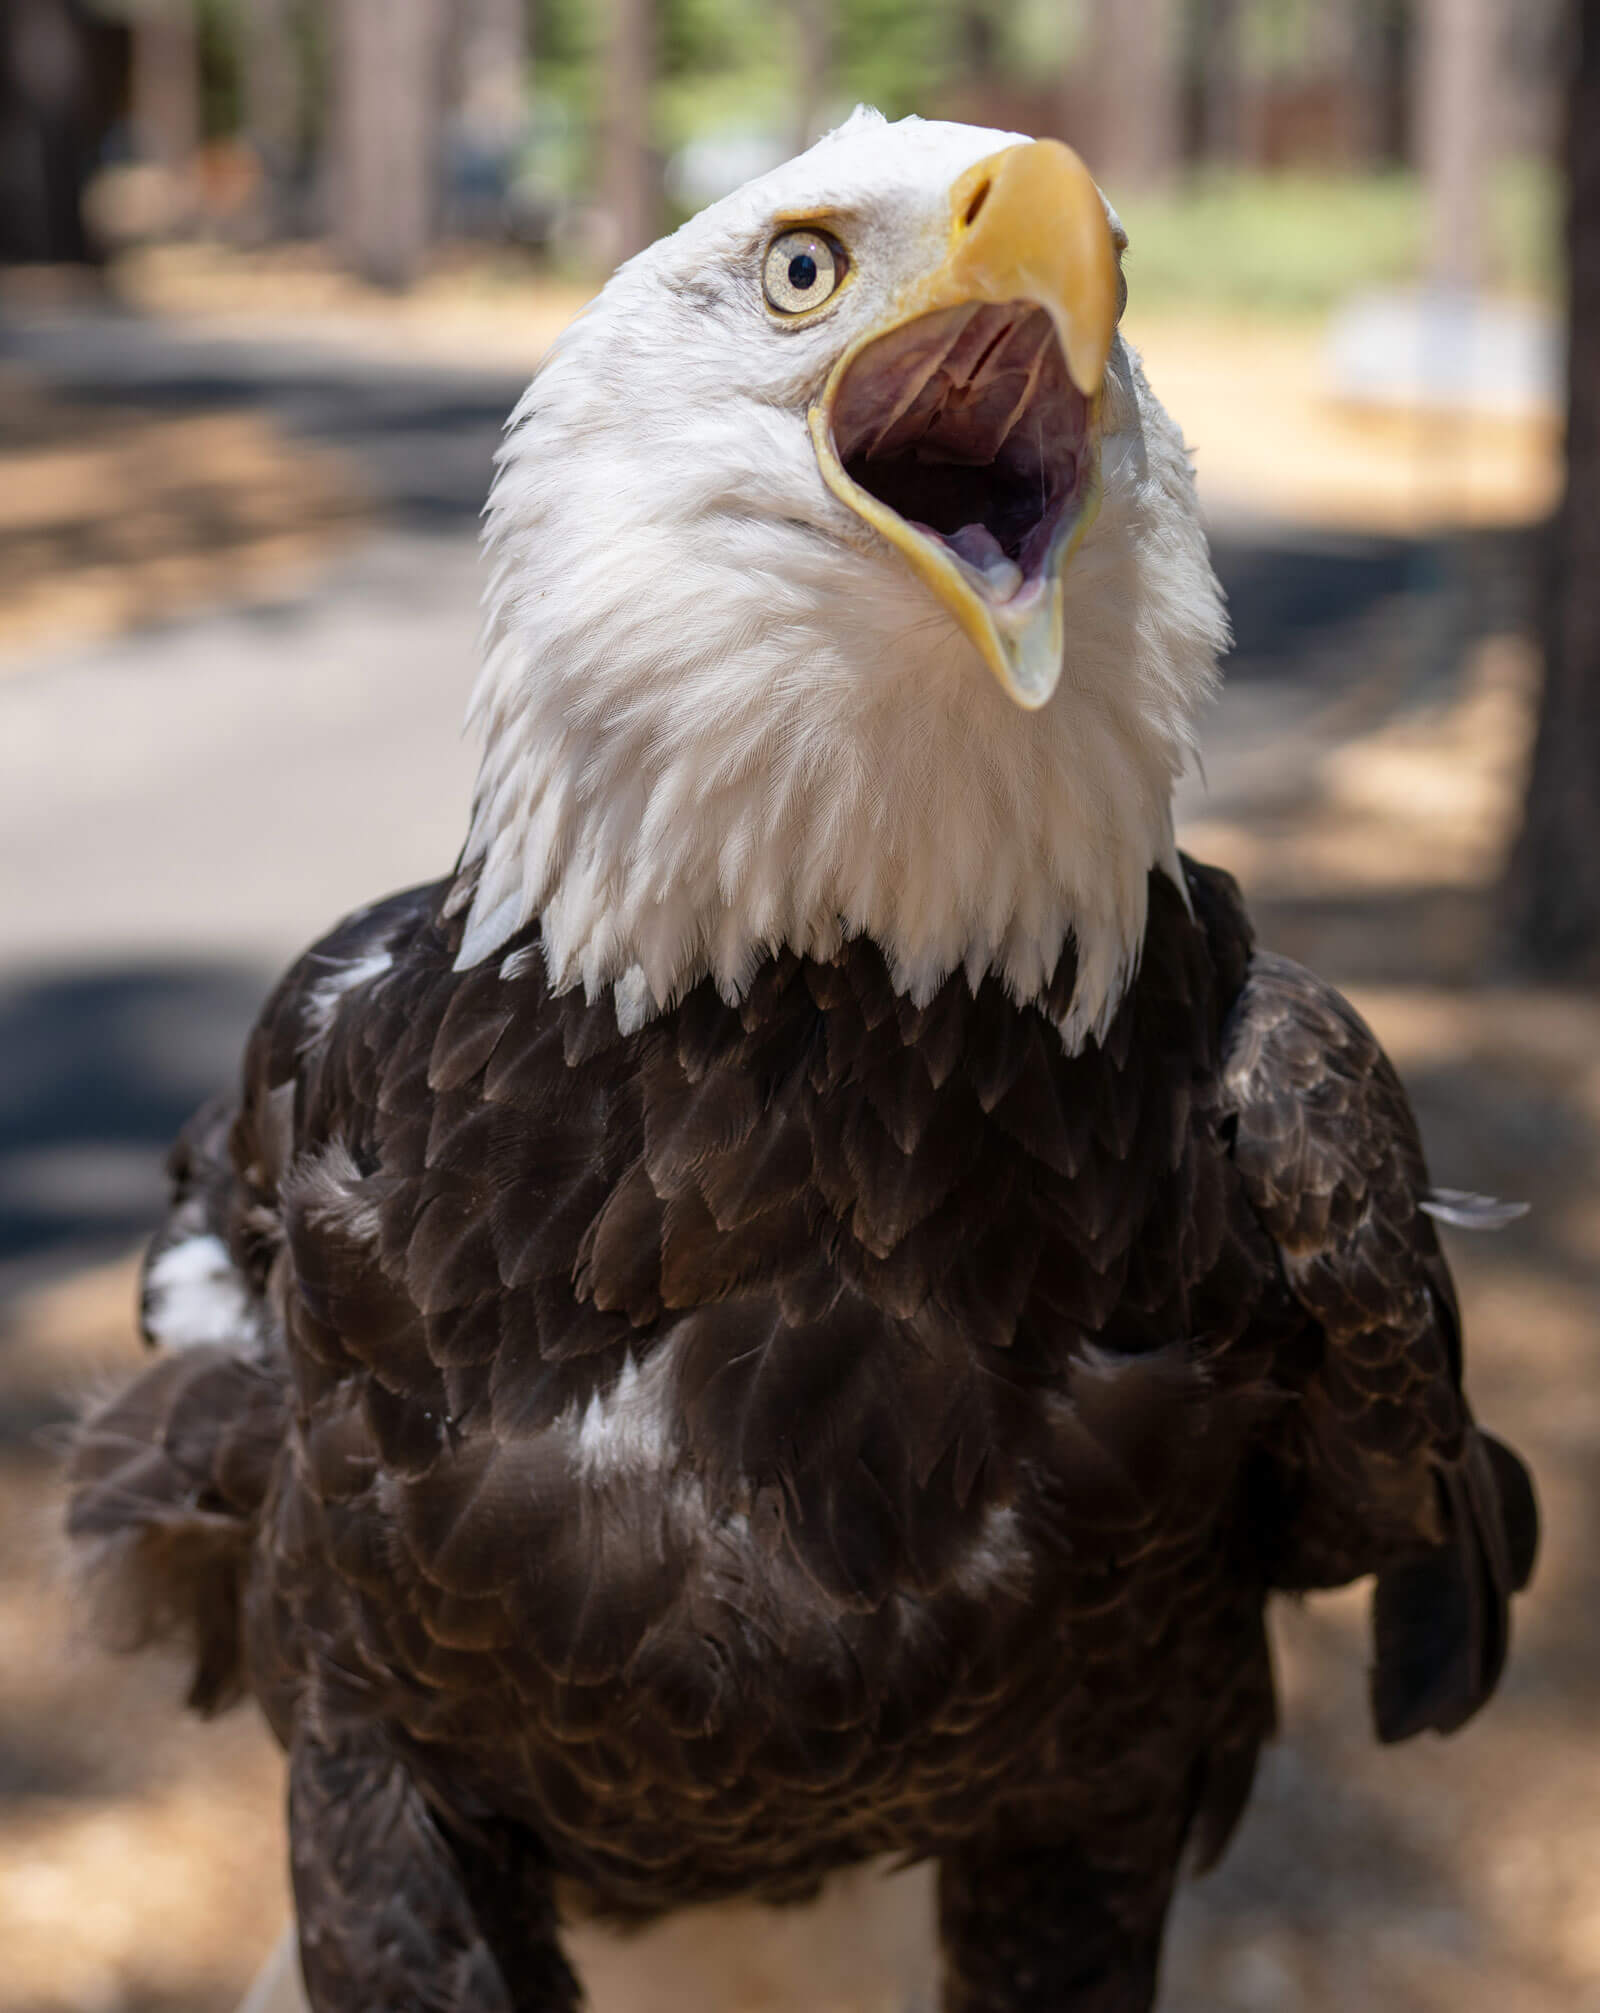 eagle with its beak open